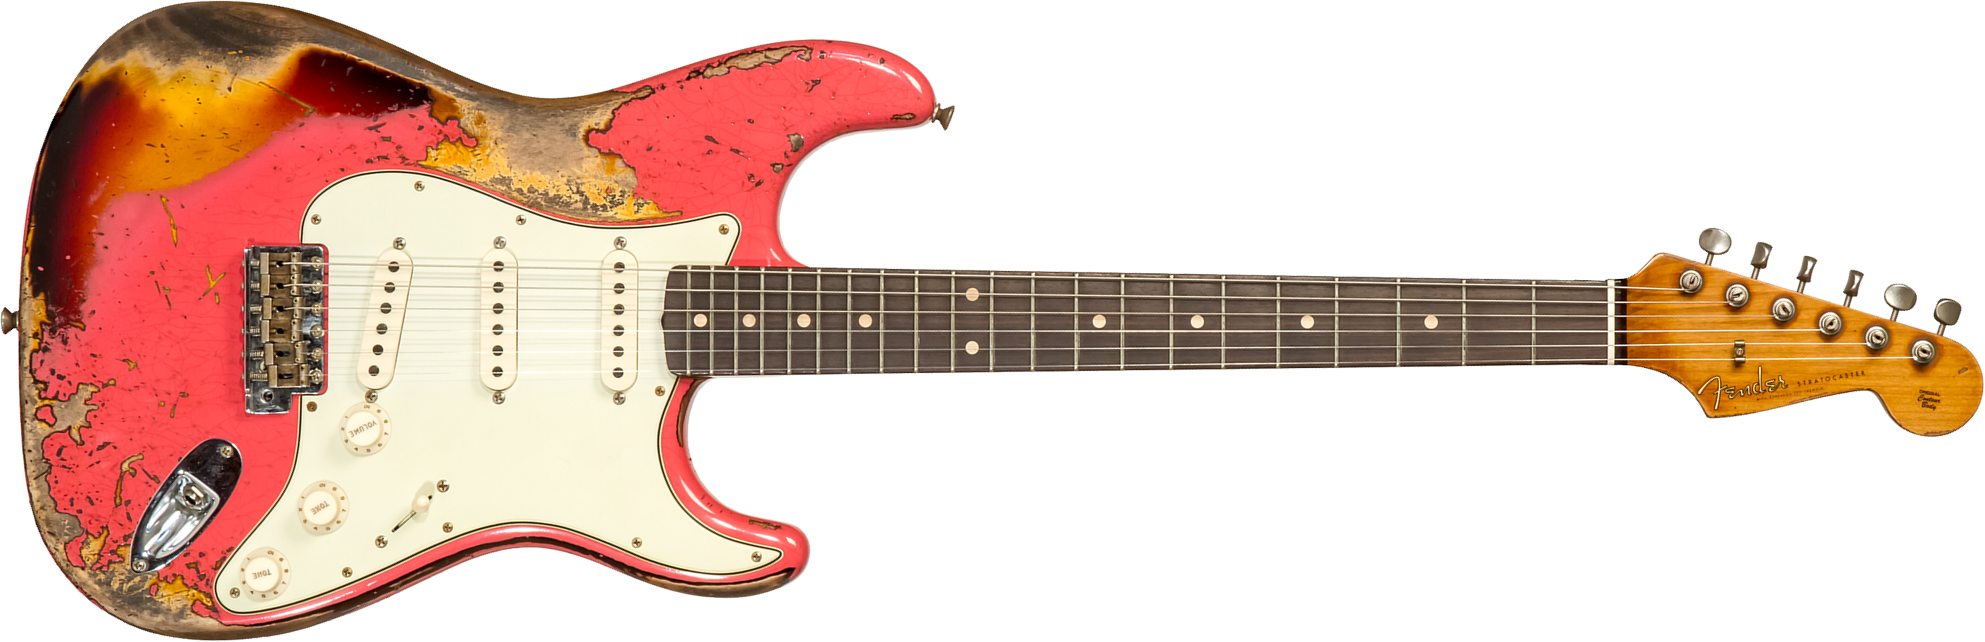 Fender Custom Shop Strat 1960/63 3s Trem Rw #cz566764 - Super Heavy Relic Fiesta Red Ov. 3-color Sunburst - Elektrische gitaar in Str-vorm - Main pict